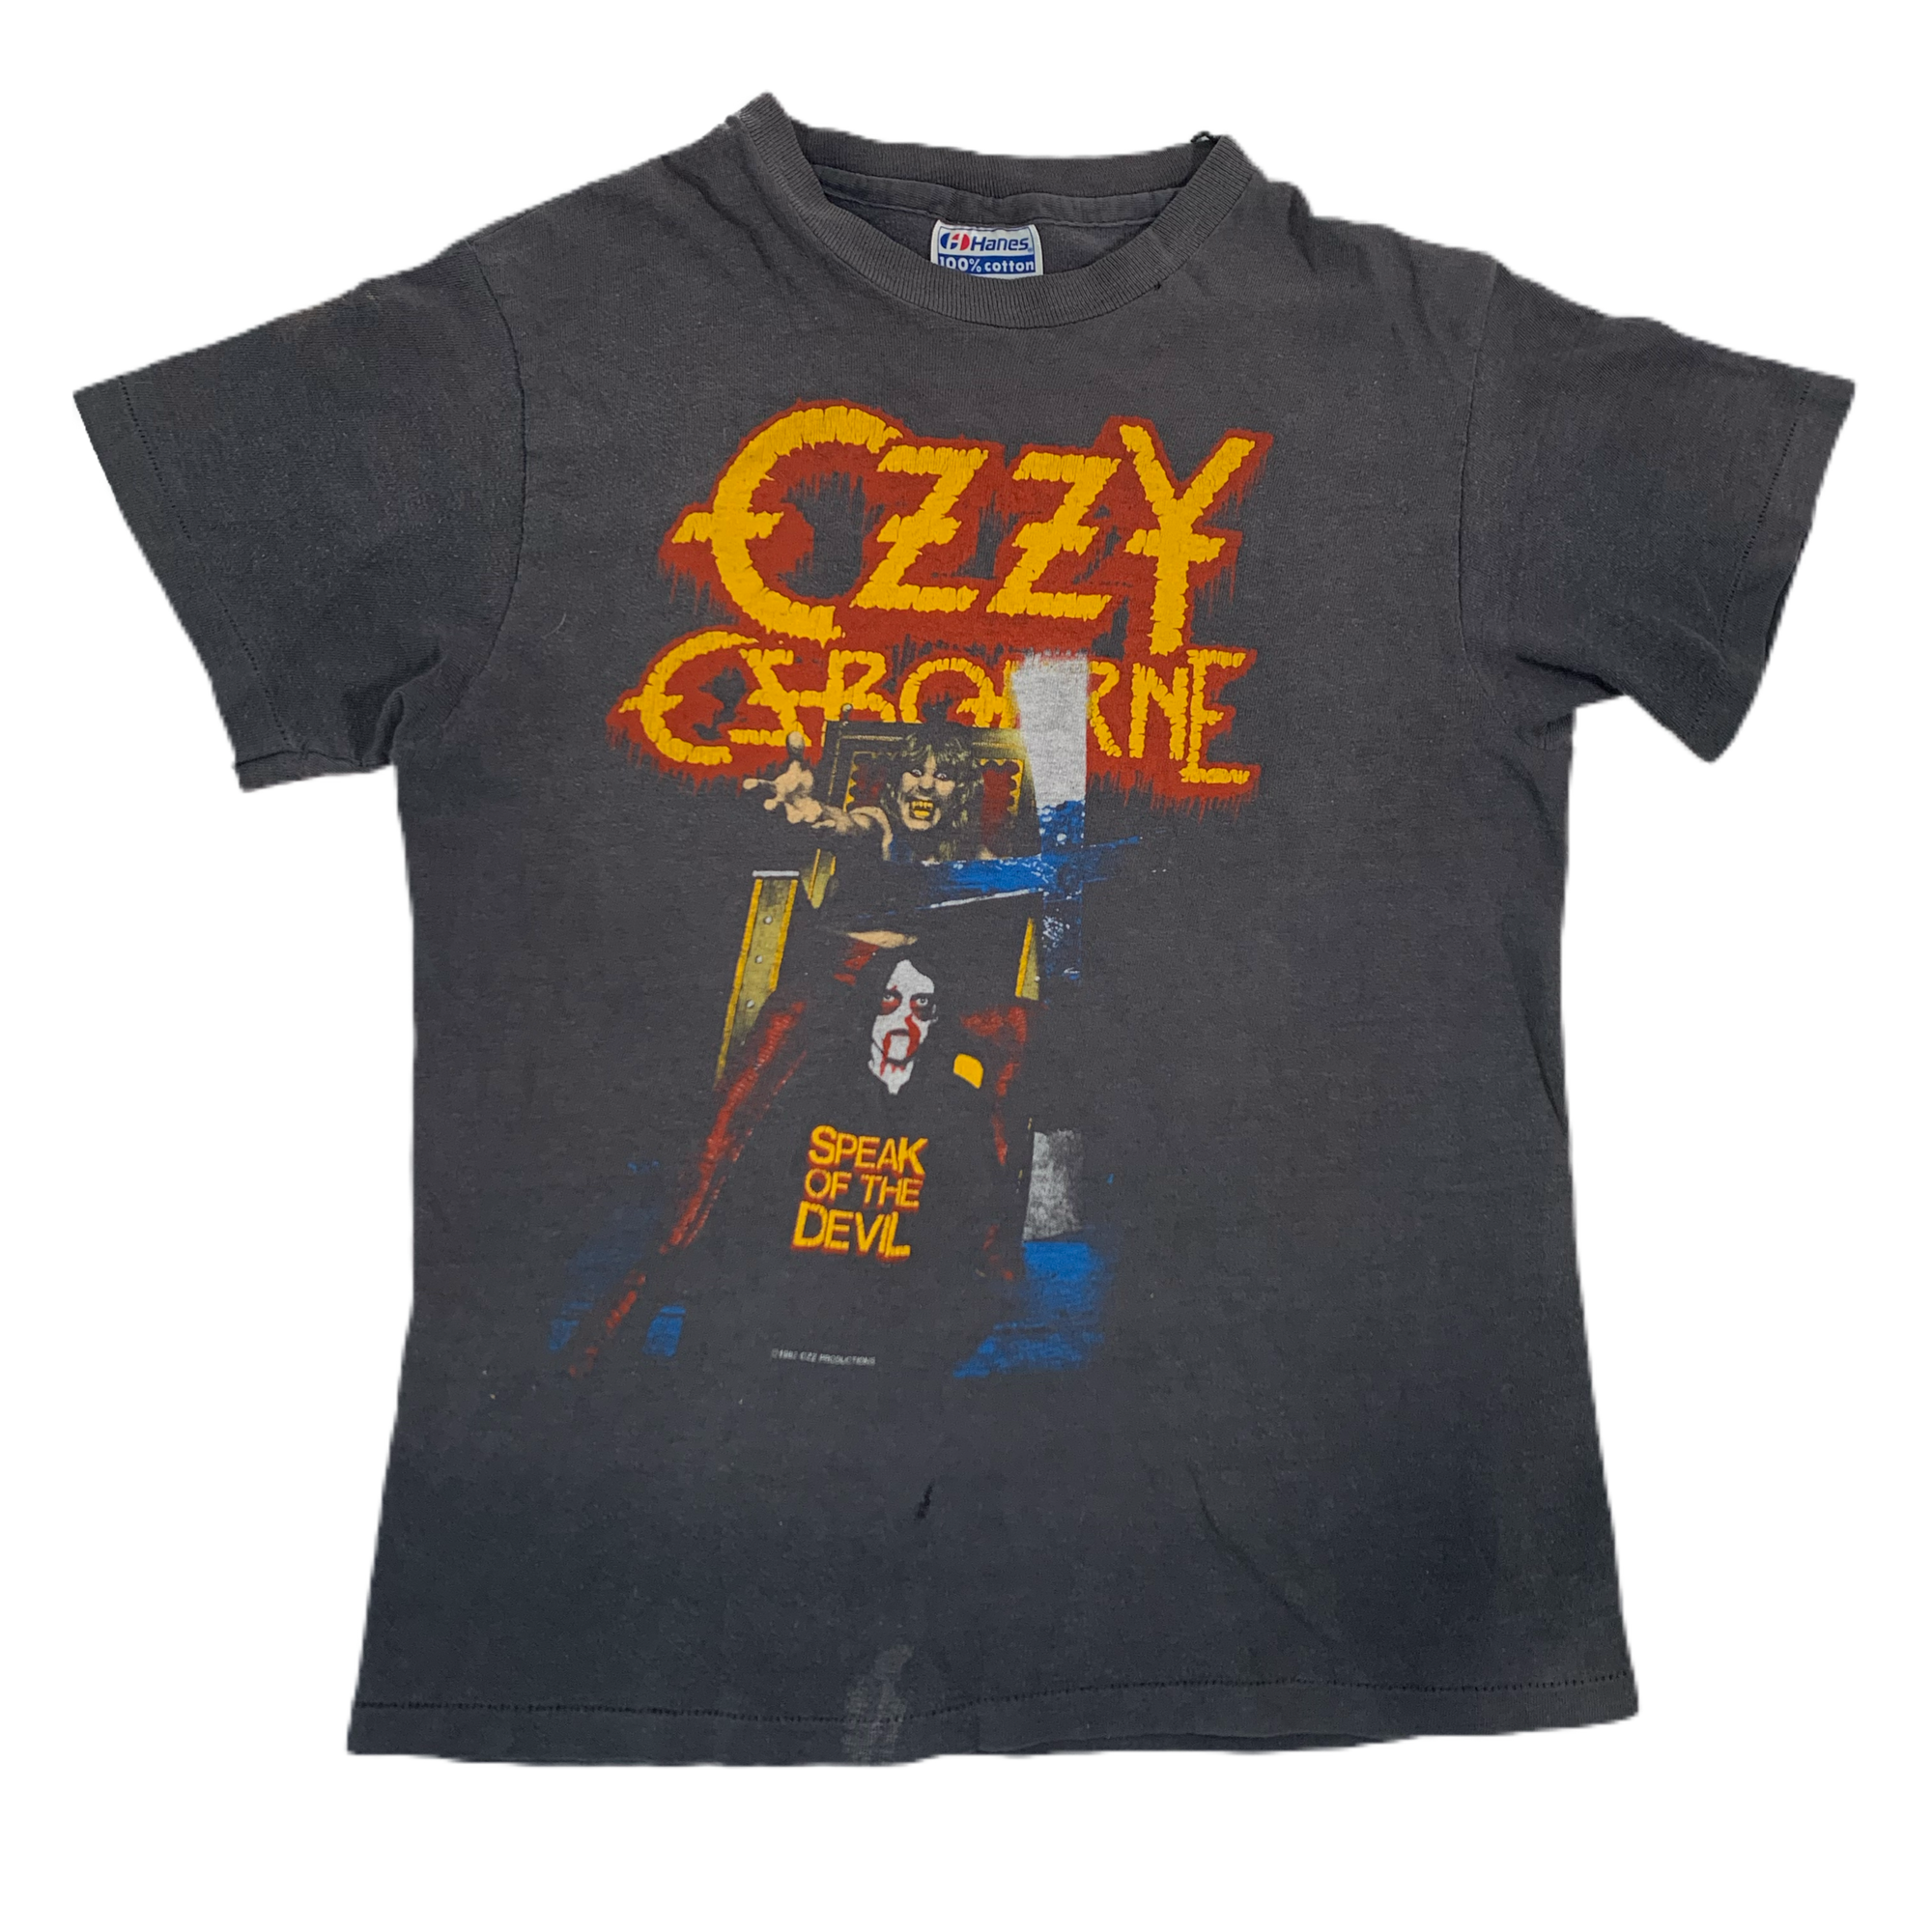 Vintage Ozzy Osbourne "Speak Of The Devil" Tour T-Shirt - jointcustodydc